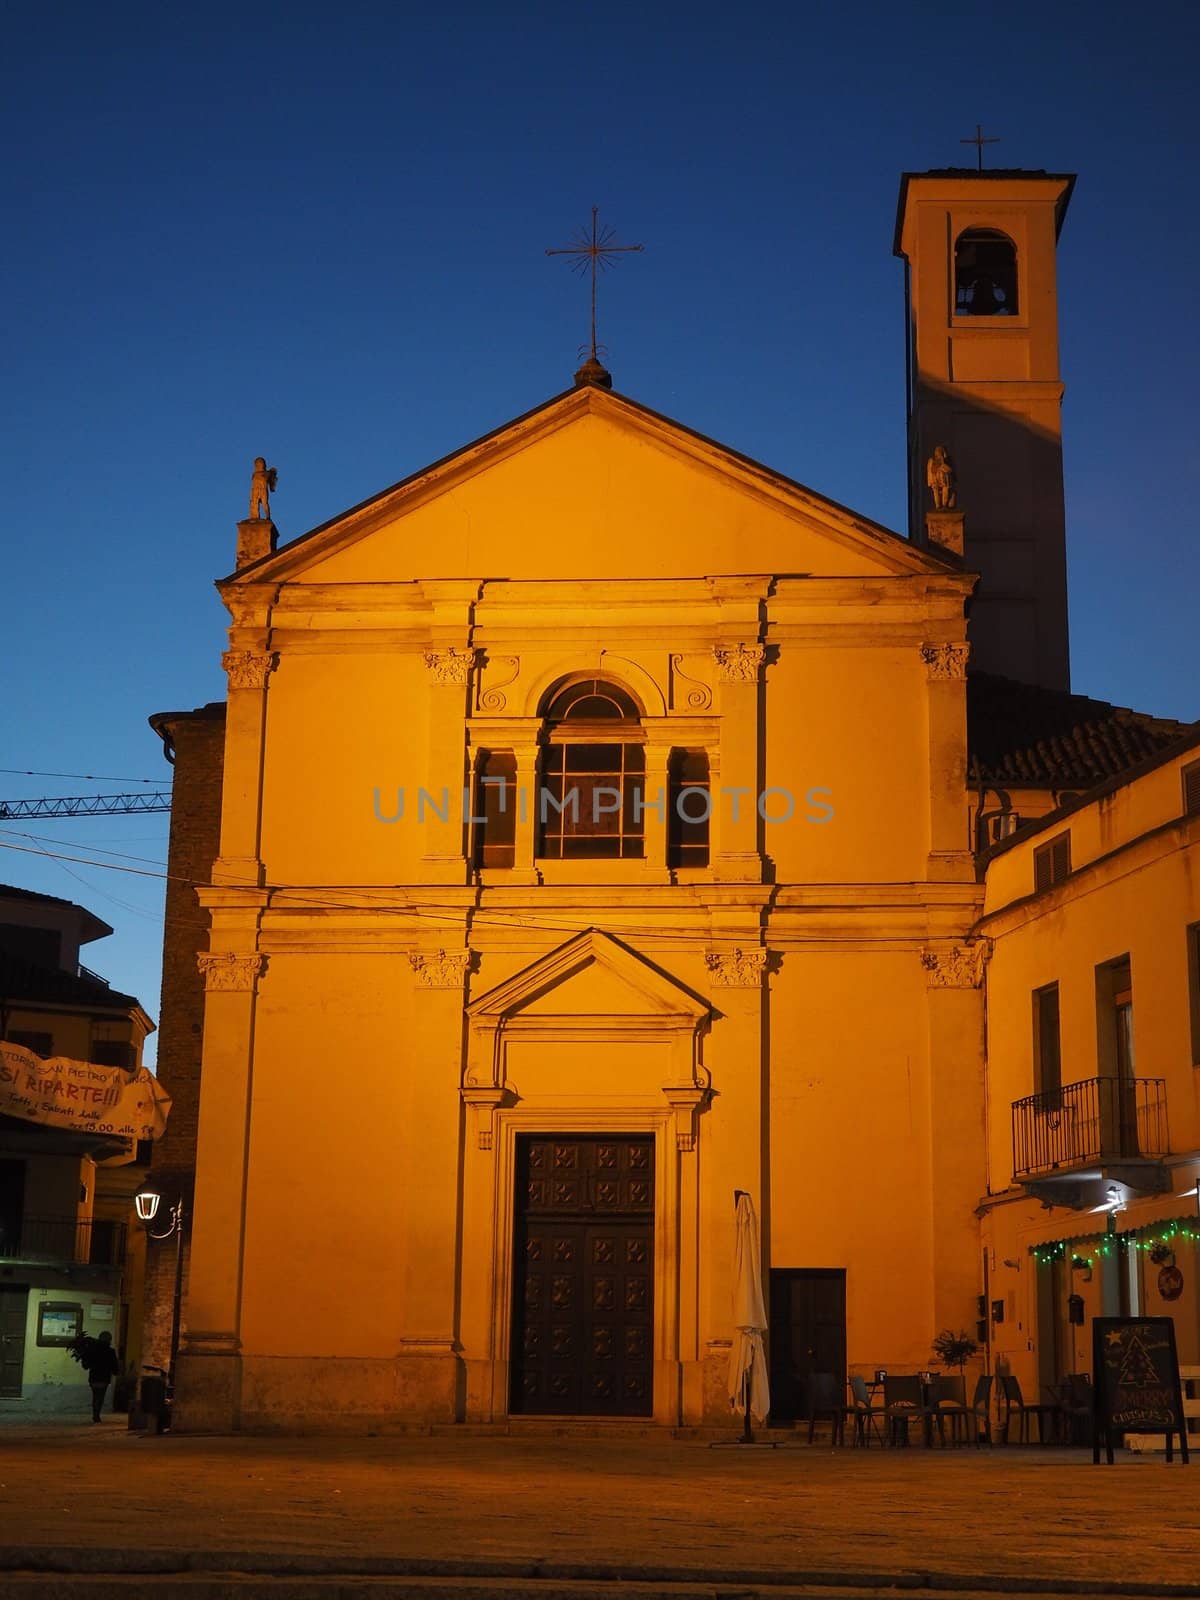 SETTIMO TORINESE, ITALY - CIRCA DECEMBER 2018: Santa Croce (meaning Holy Cross) church at night